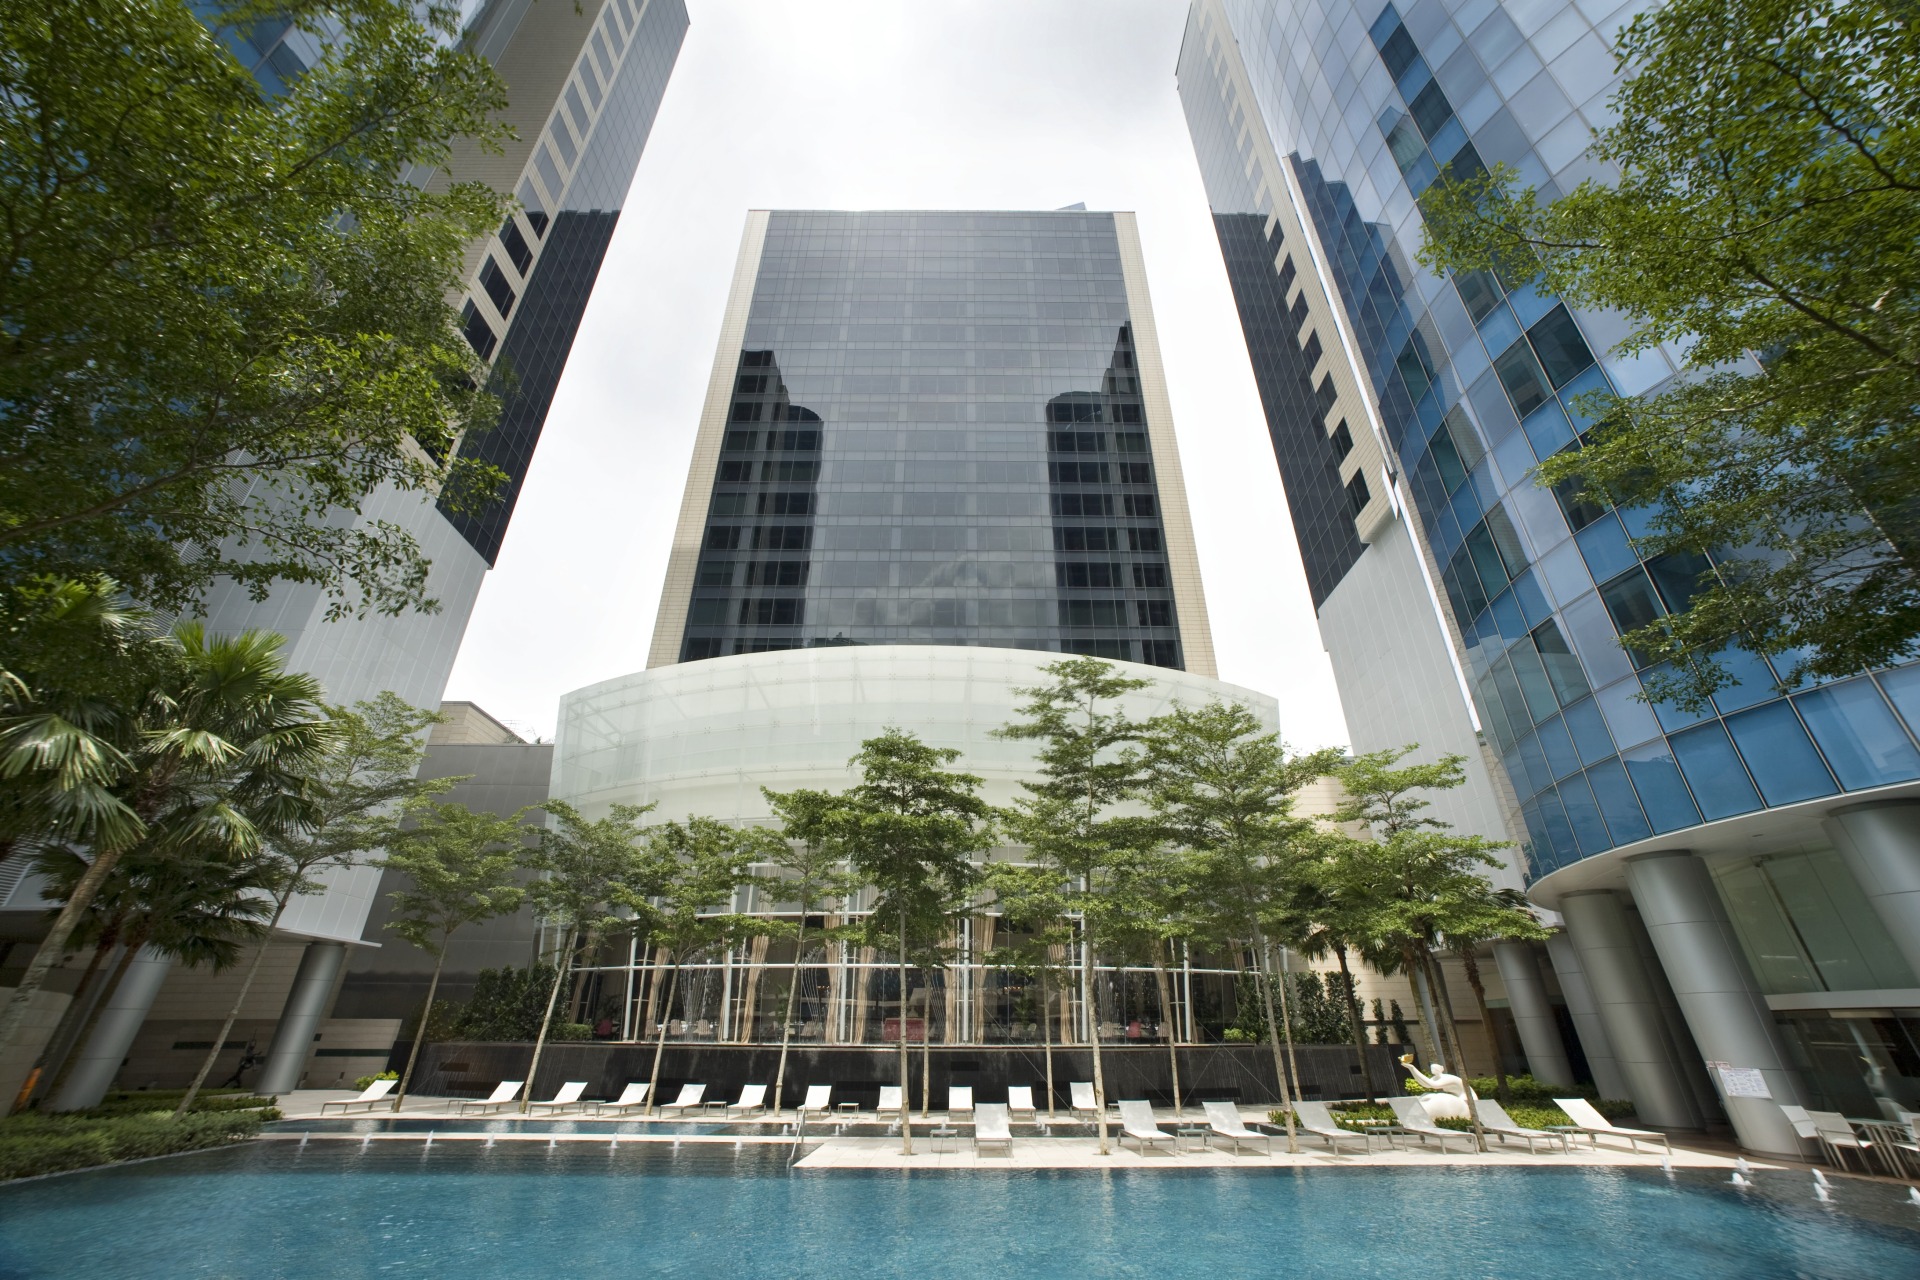 St. Regis Hotel and Residences Singapore